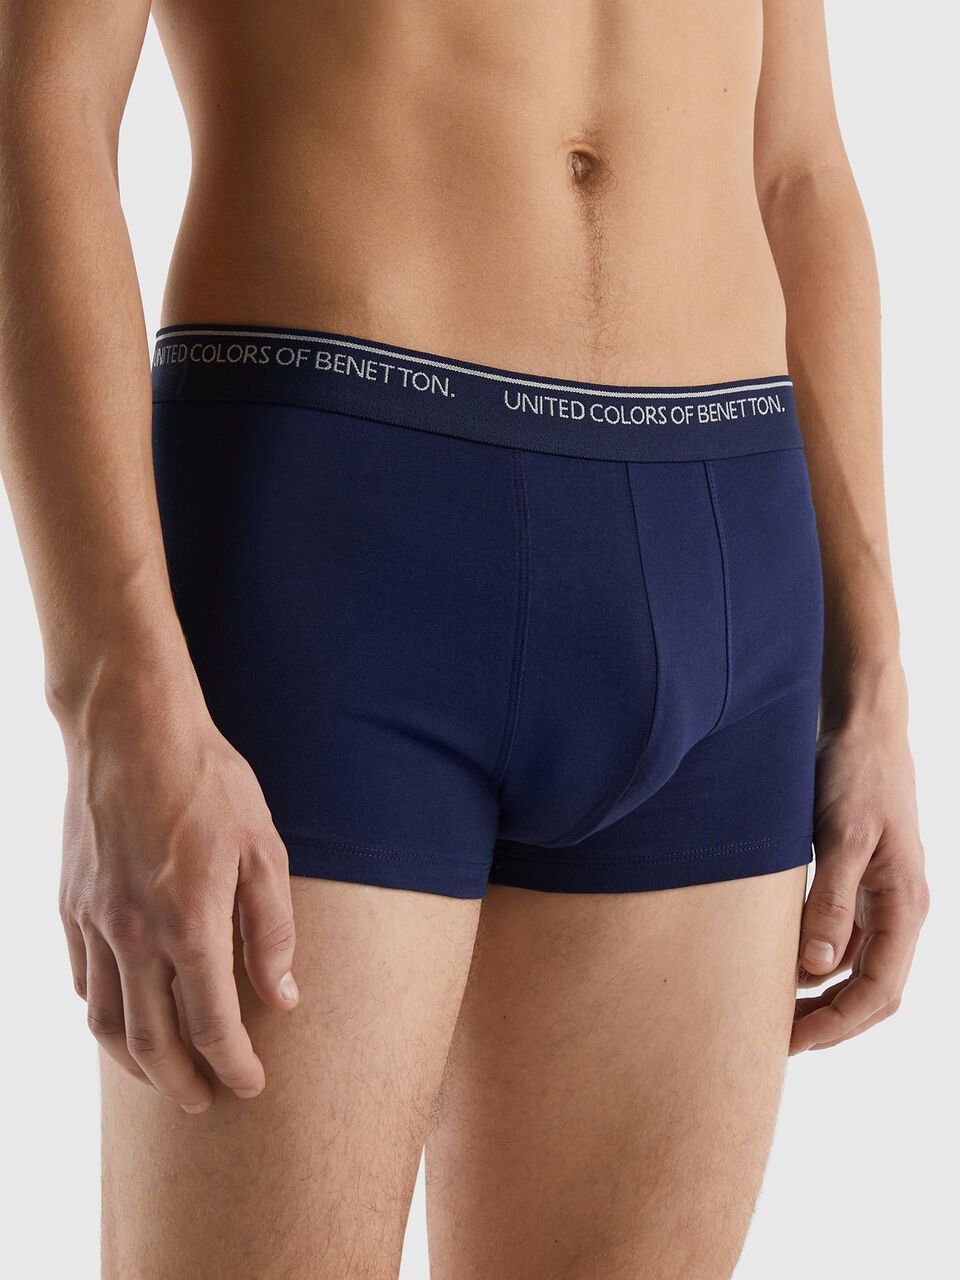 Cotton Underwear Boxers for Men in Dark Blue With Fair Isle/nordic